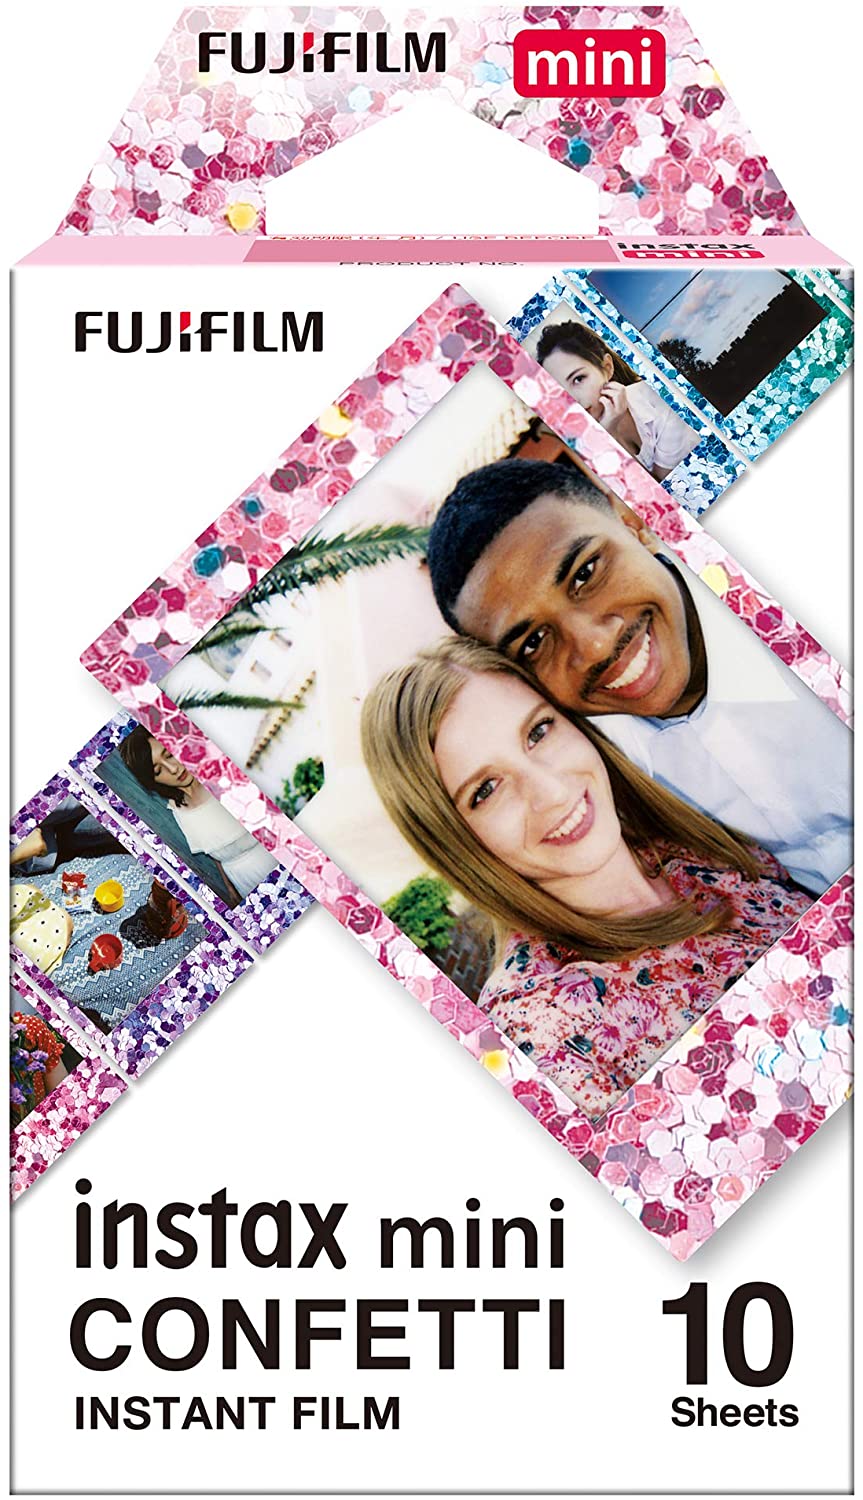 Fujifilm Mystery Bundle Random Film Check 3X10 Sheets for Instax Mini Instant Cameras